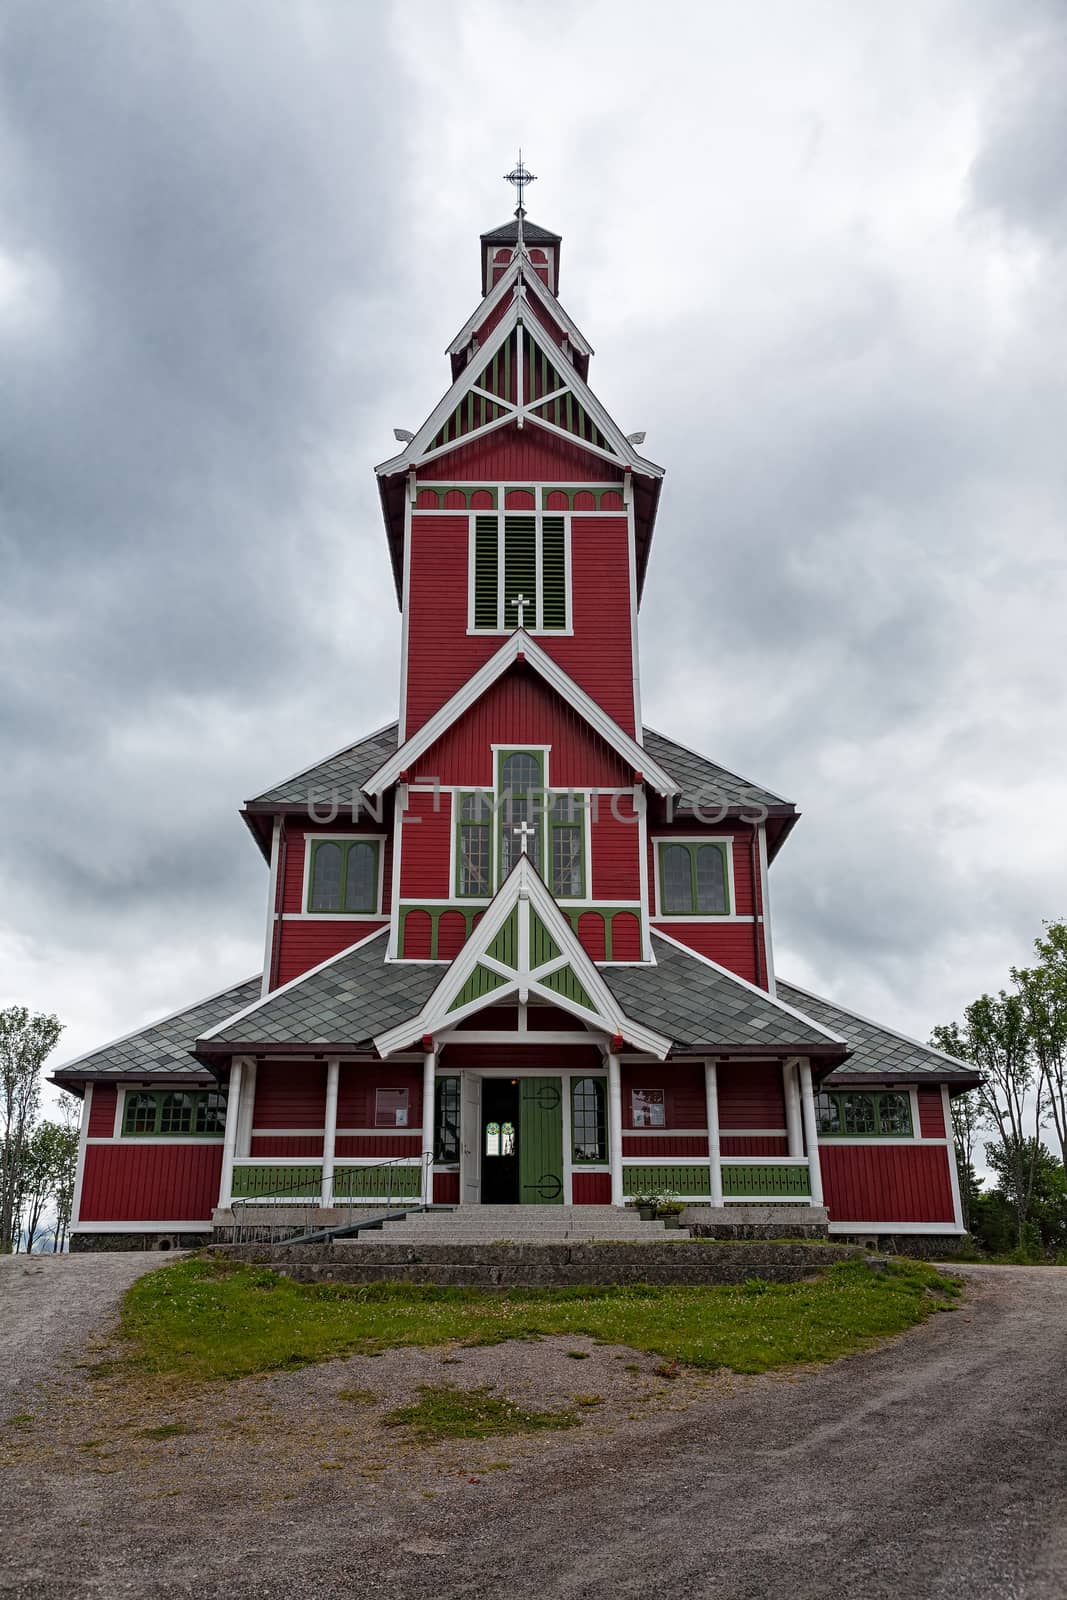 Buksnes church in Gravdal city, Norway by LuigiMorbidelli